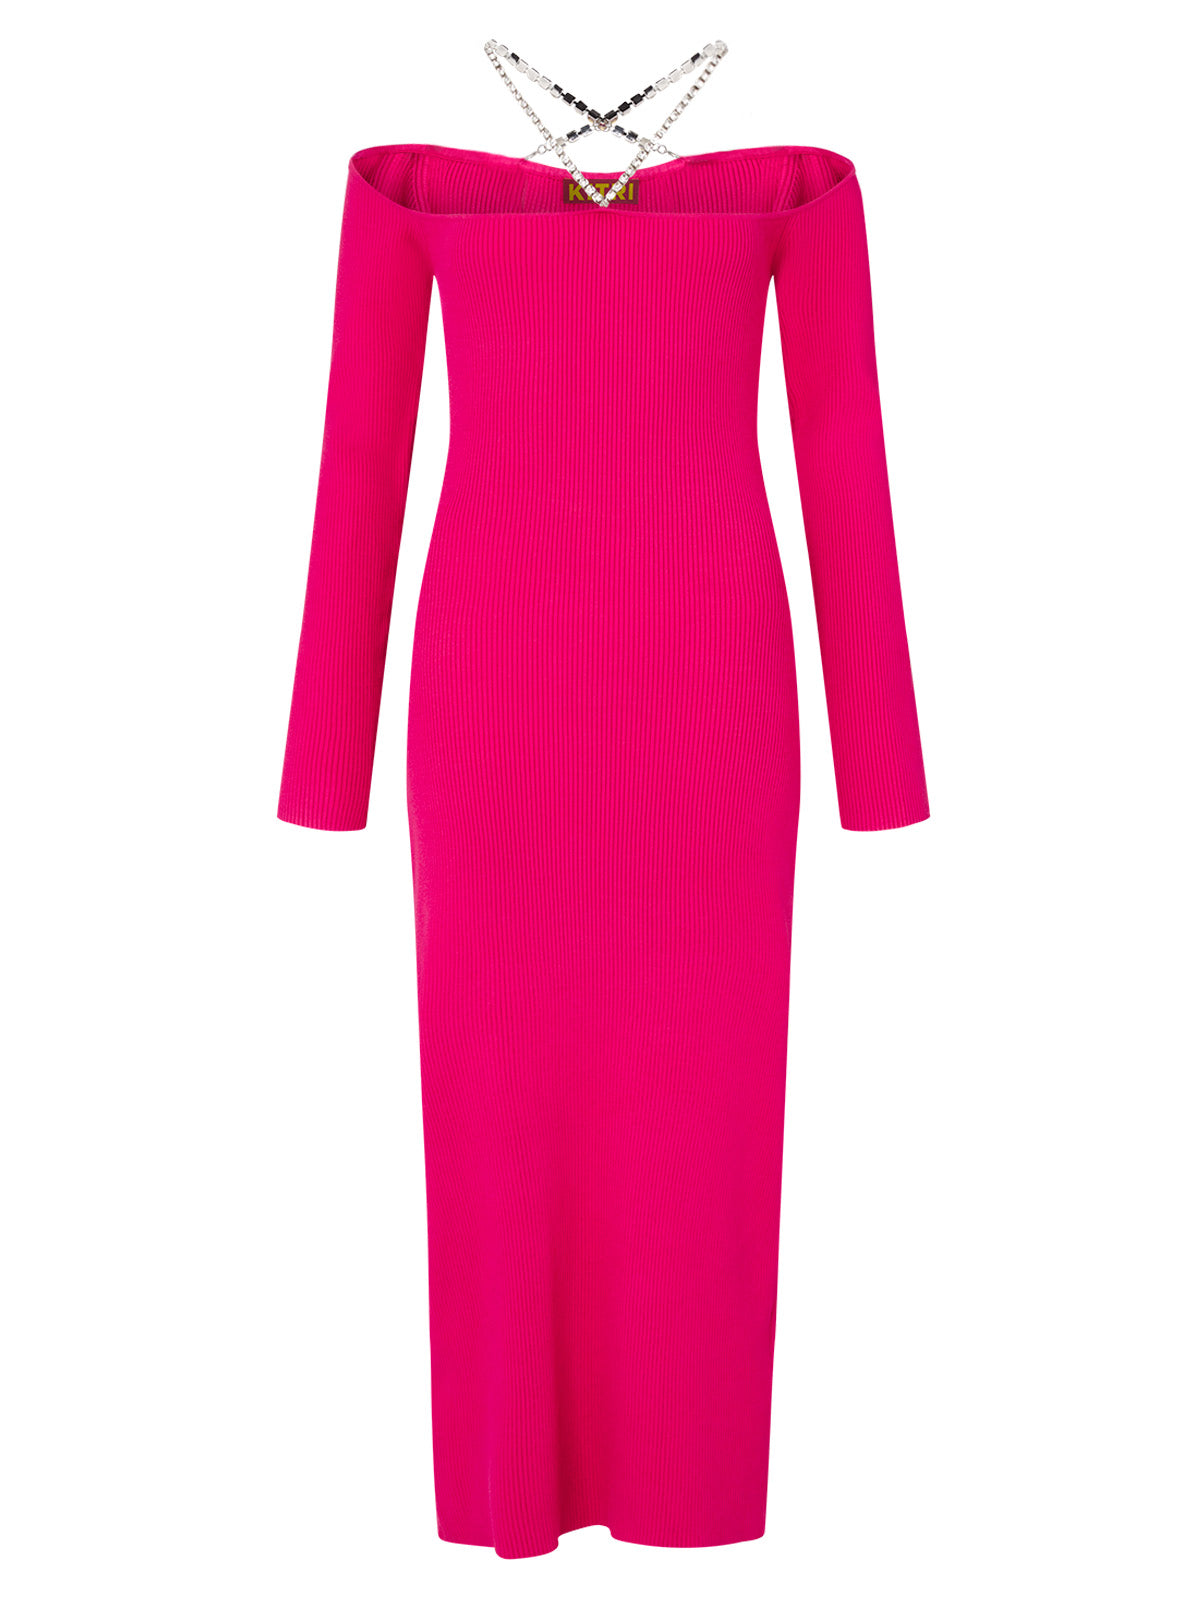 Renee Pink Bardot Knit Dress | KITRI Studio